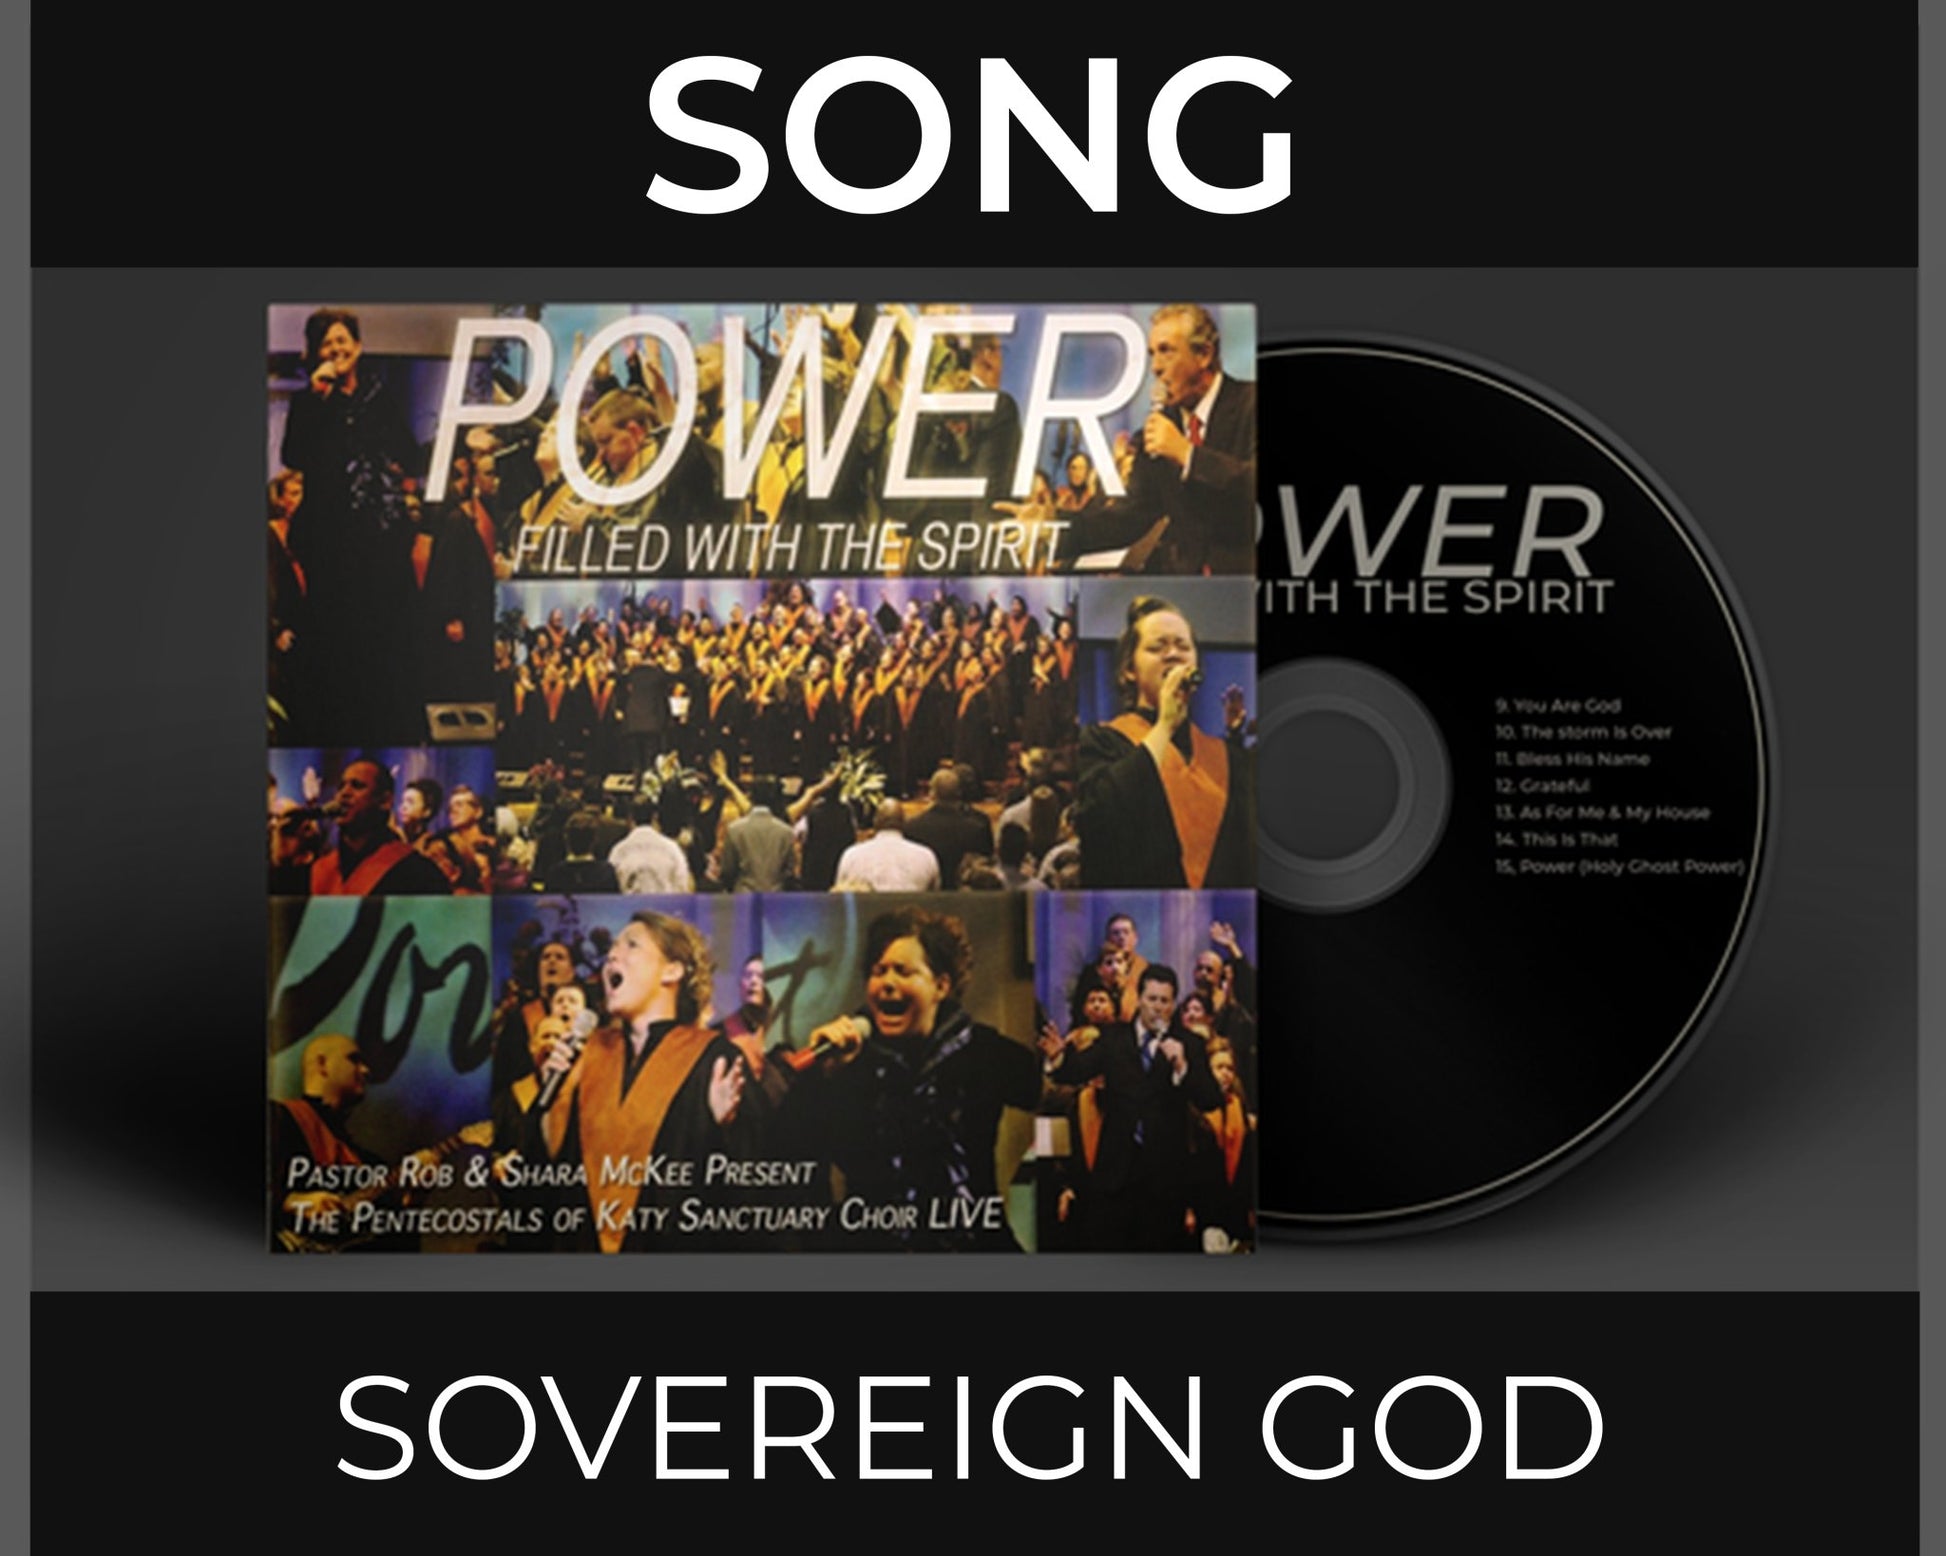 Sovereign God - The POK Store